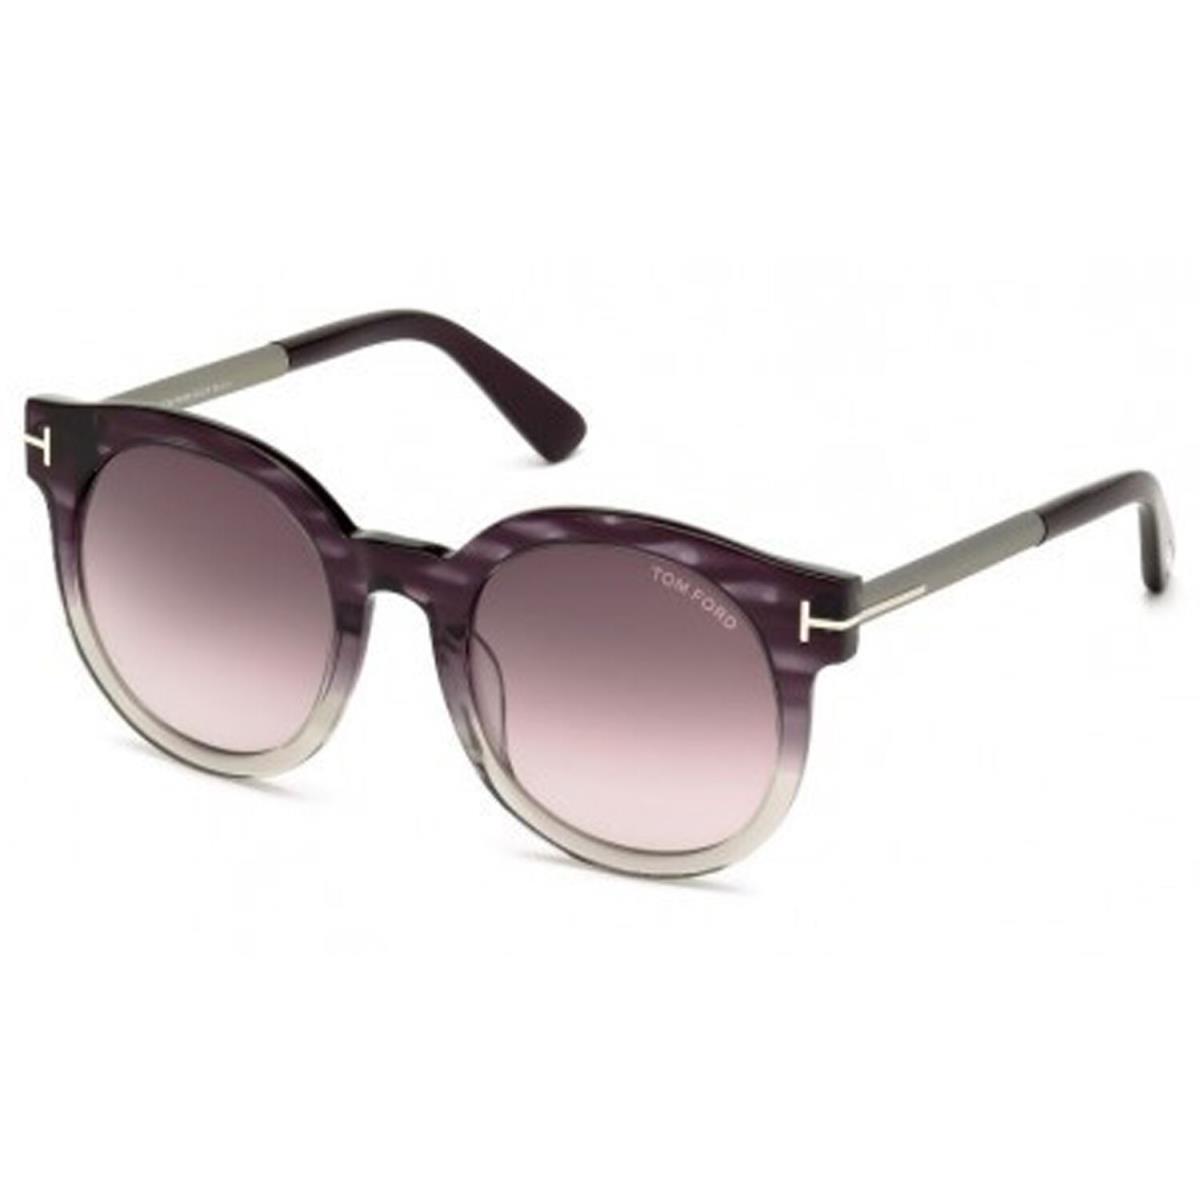 Tom Ford Sunglasses TF 435 Janina Grey-brown / Grey Gradient TF435-83T